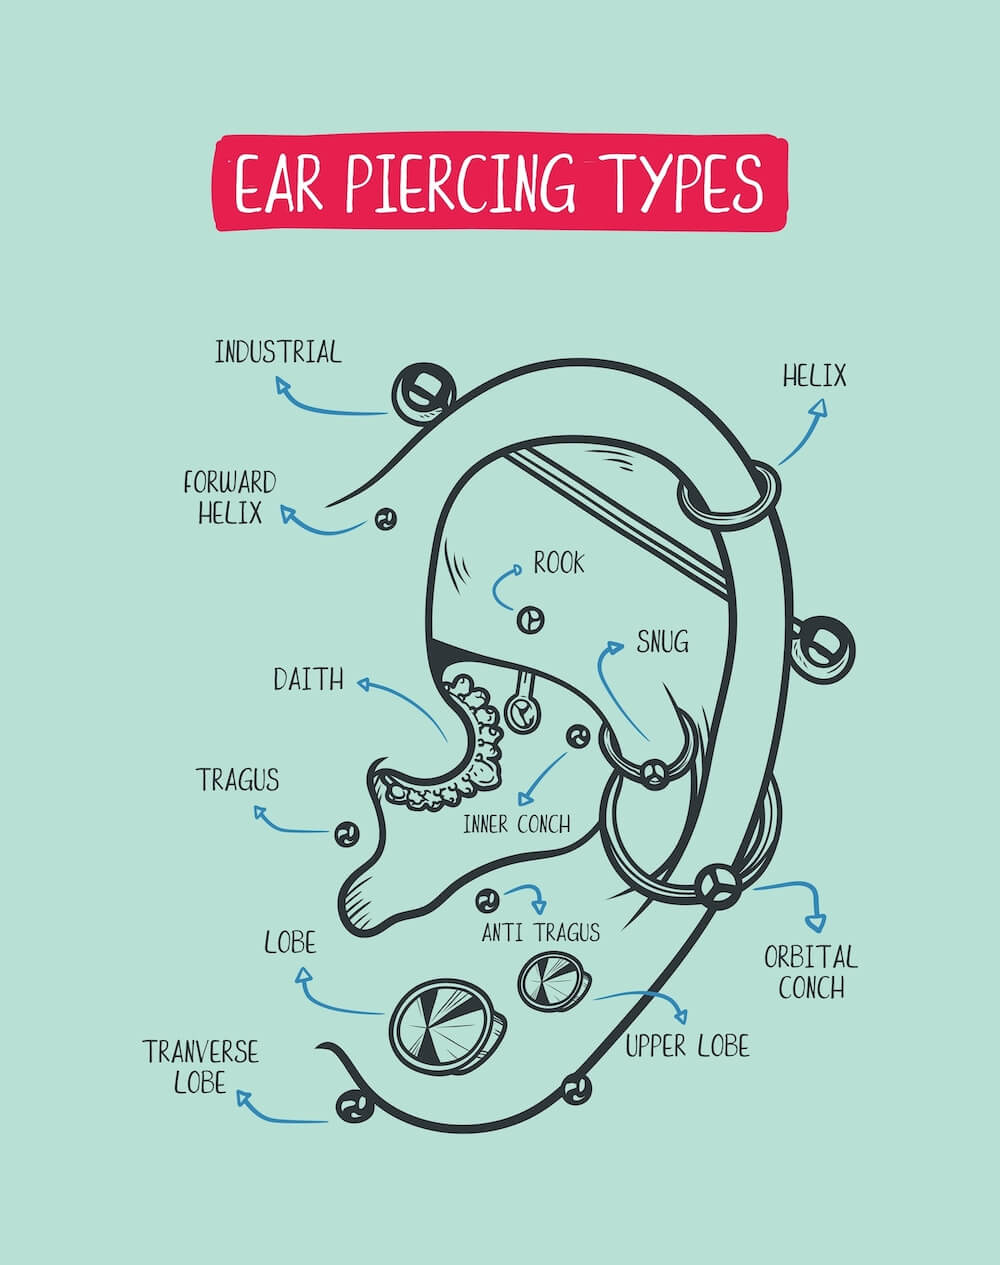 Ear piercing types diagram